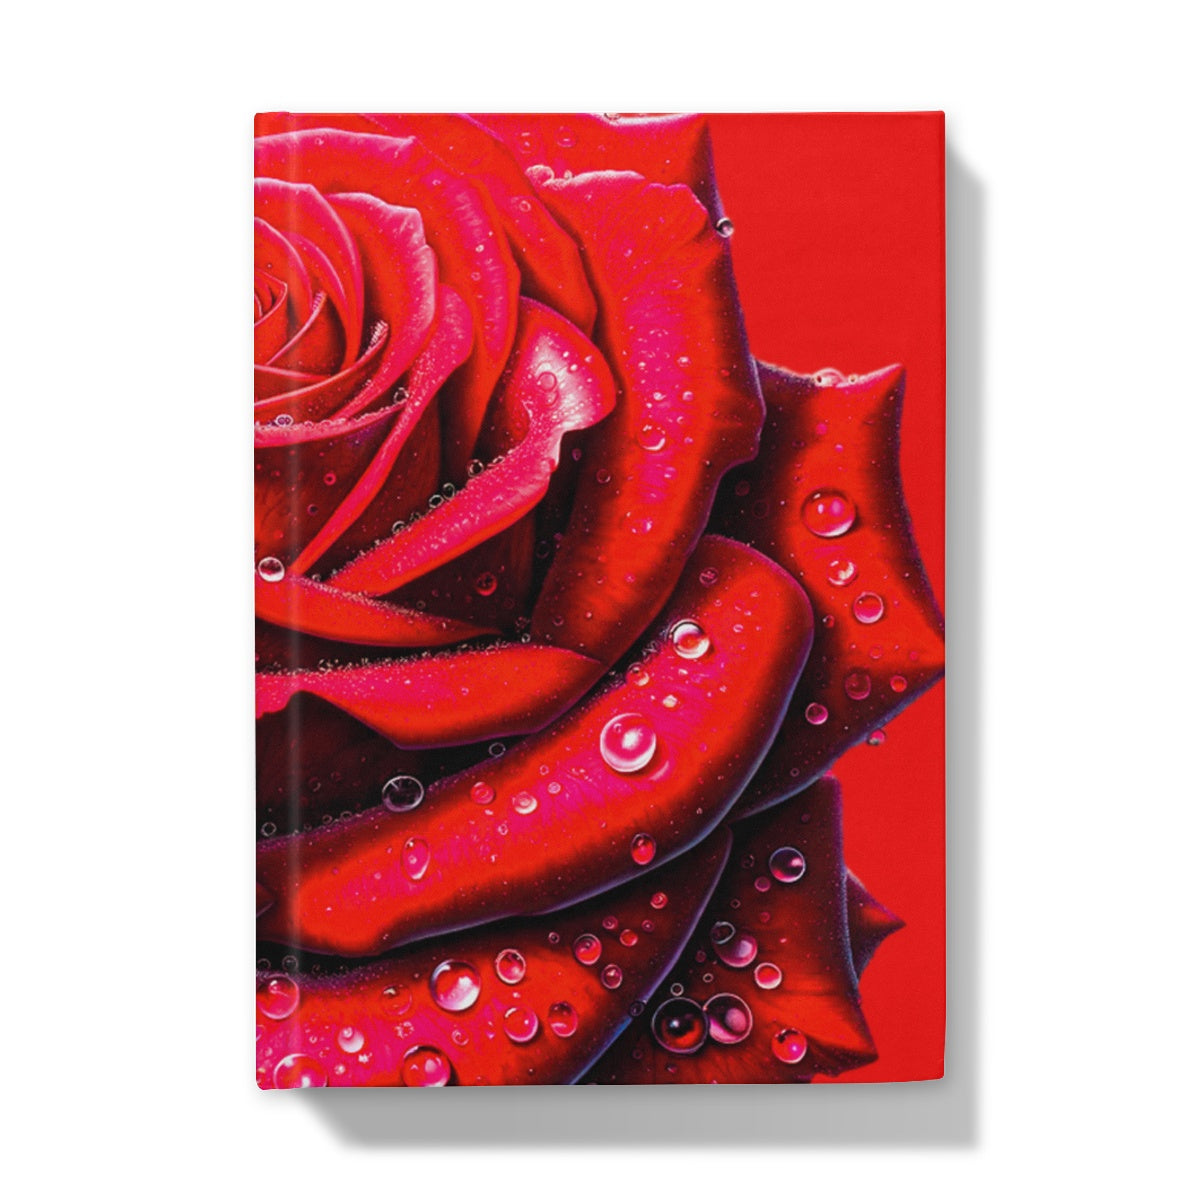 Red Rose Waterdrops Hardback Journal